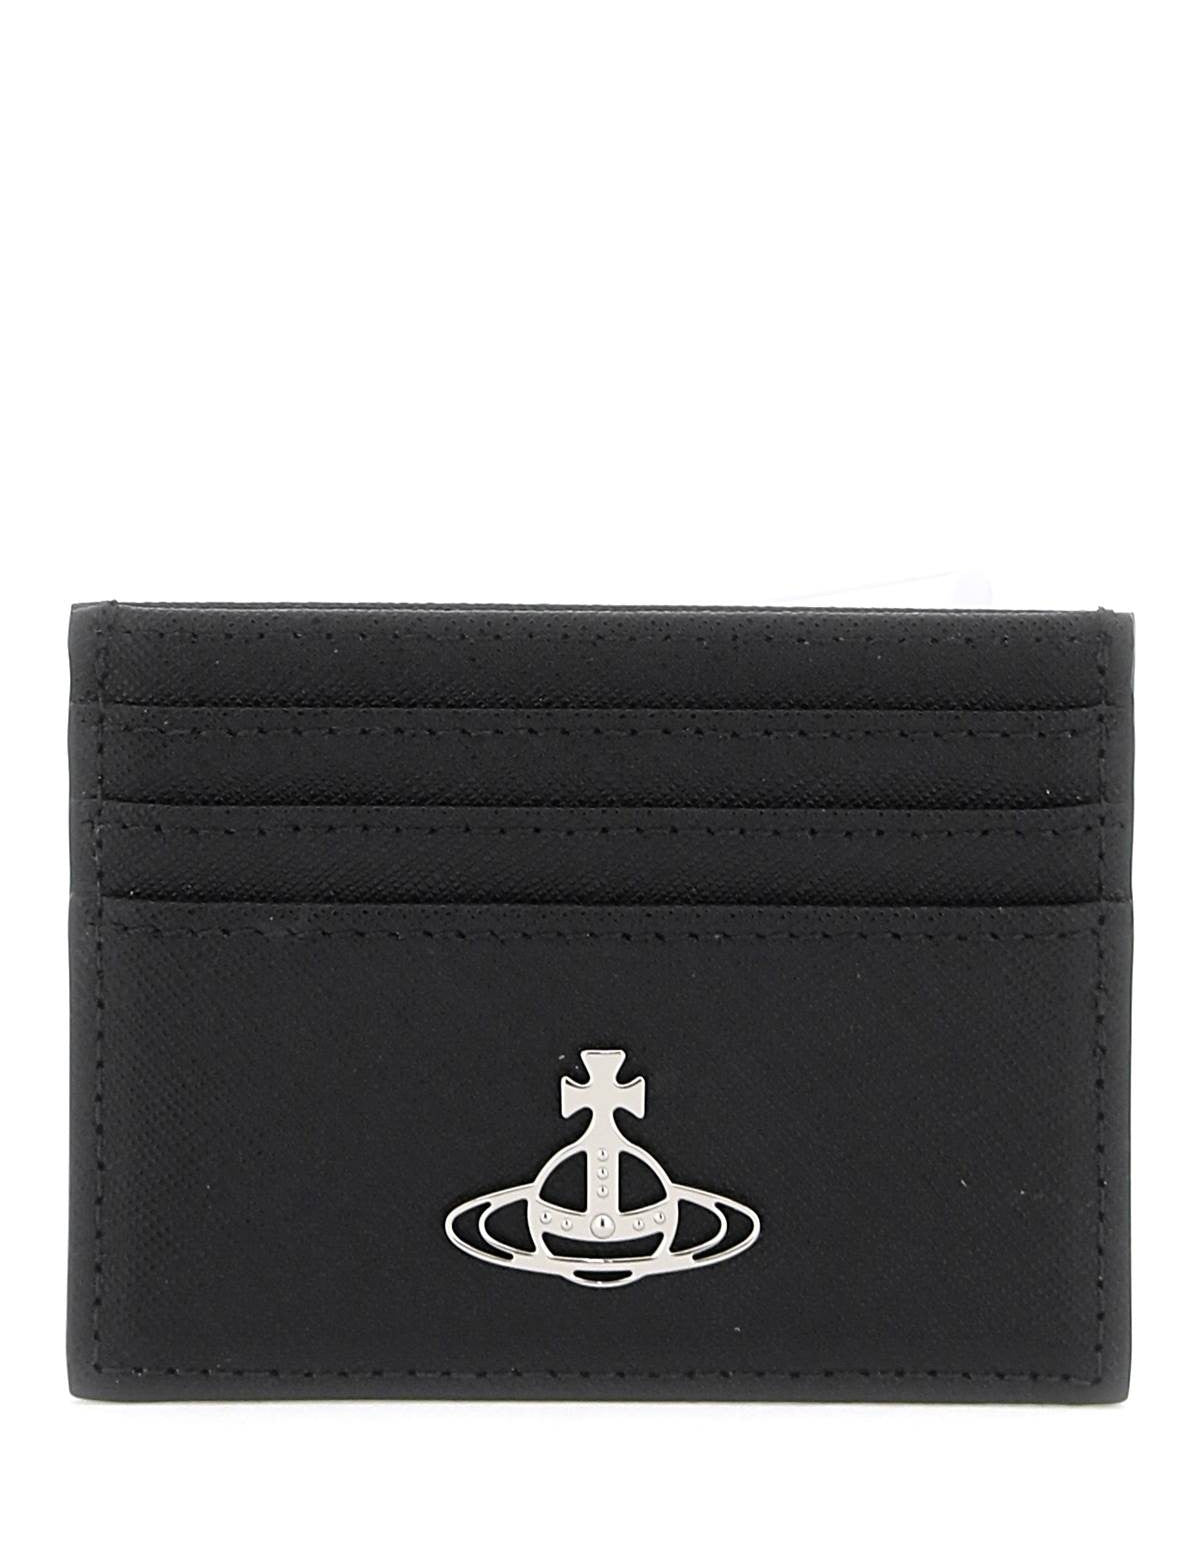 saffiano-leather-orb-card-holder.jpg